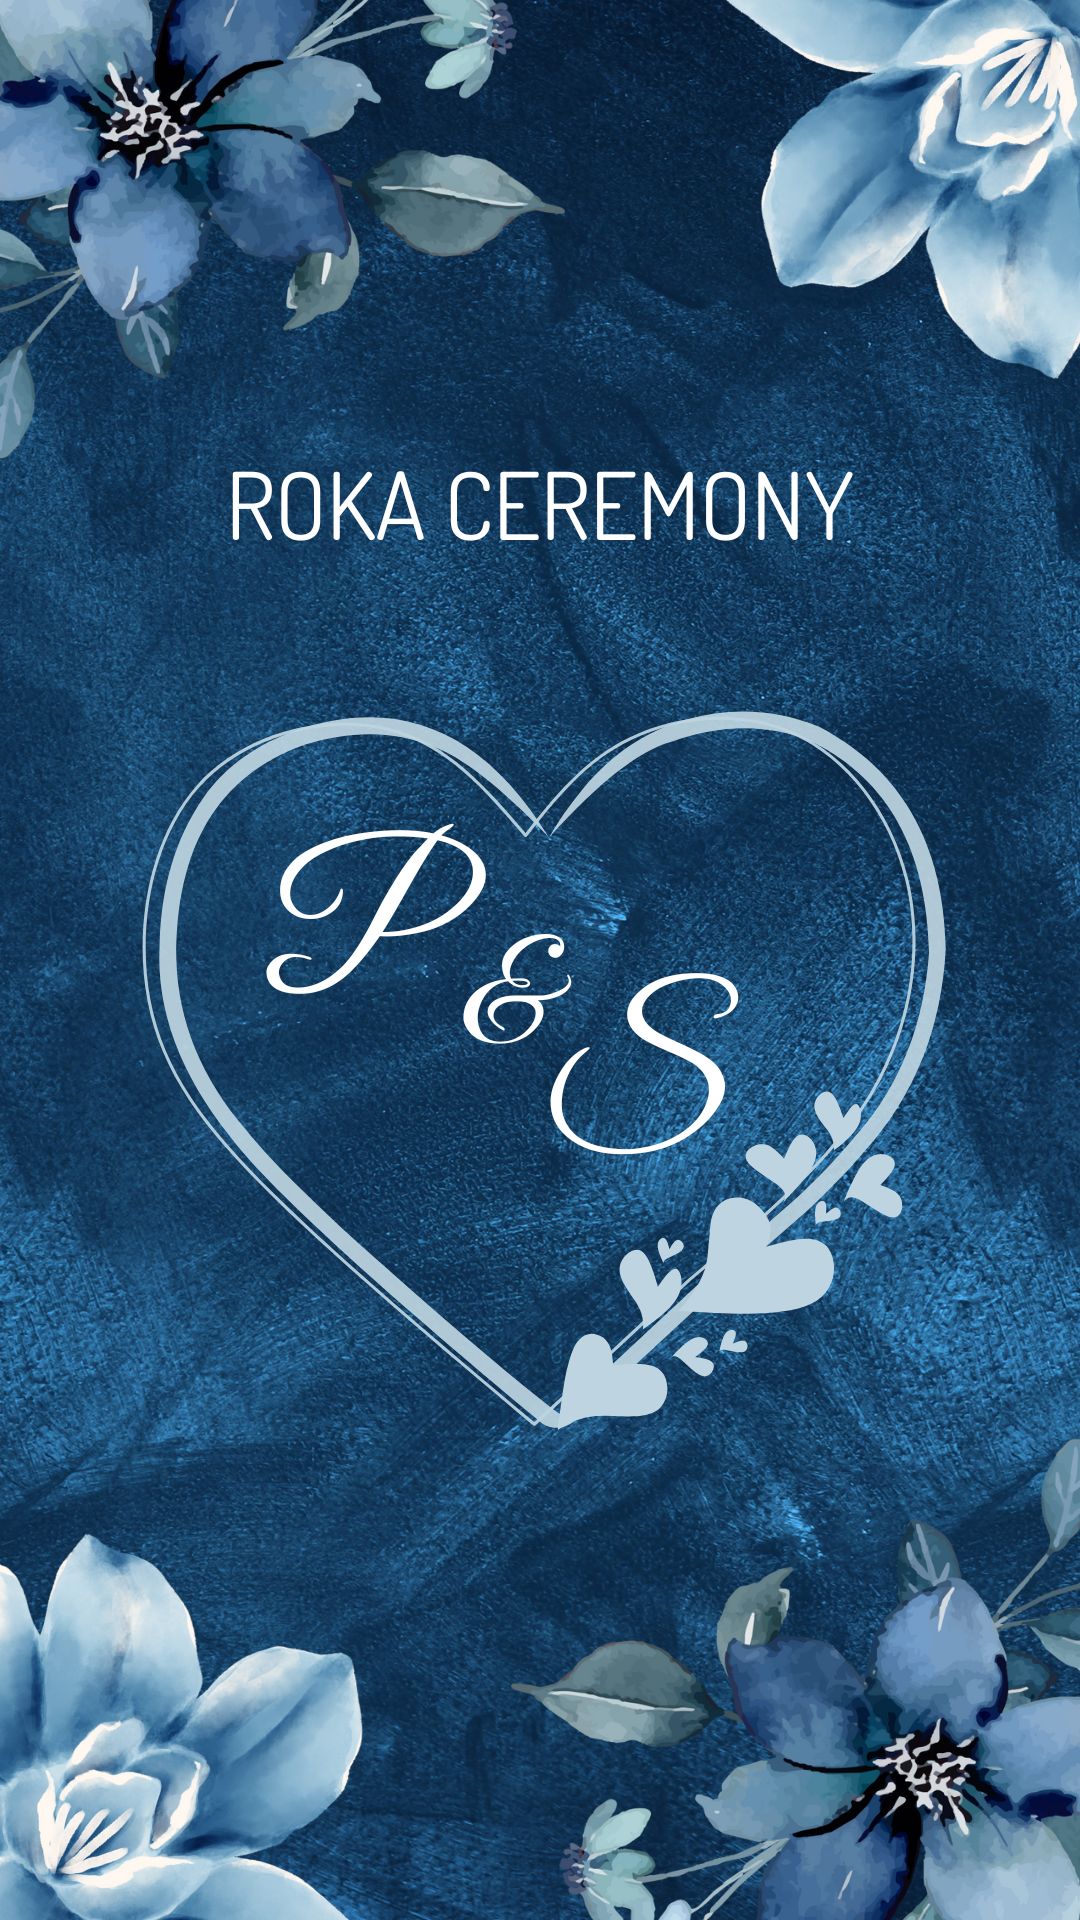 Sober Roka ceremony Video Invitation